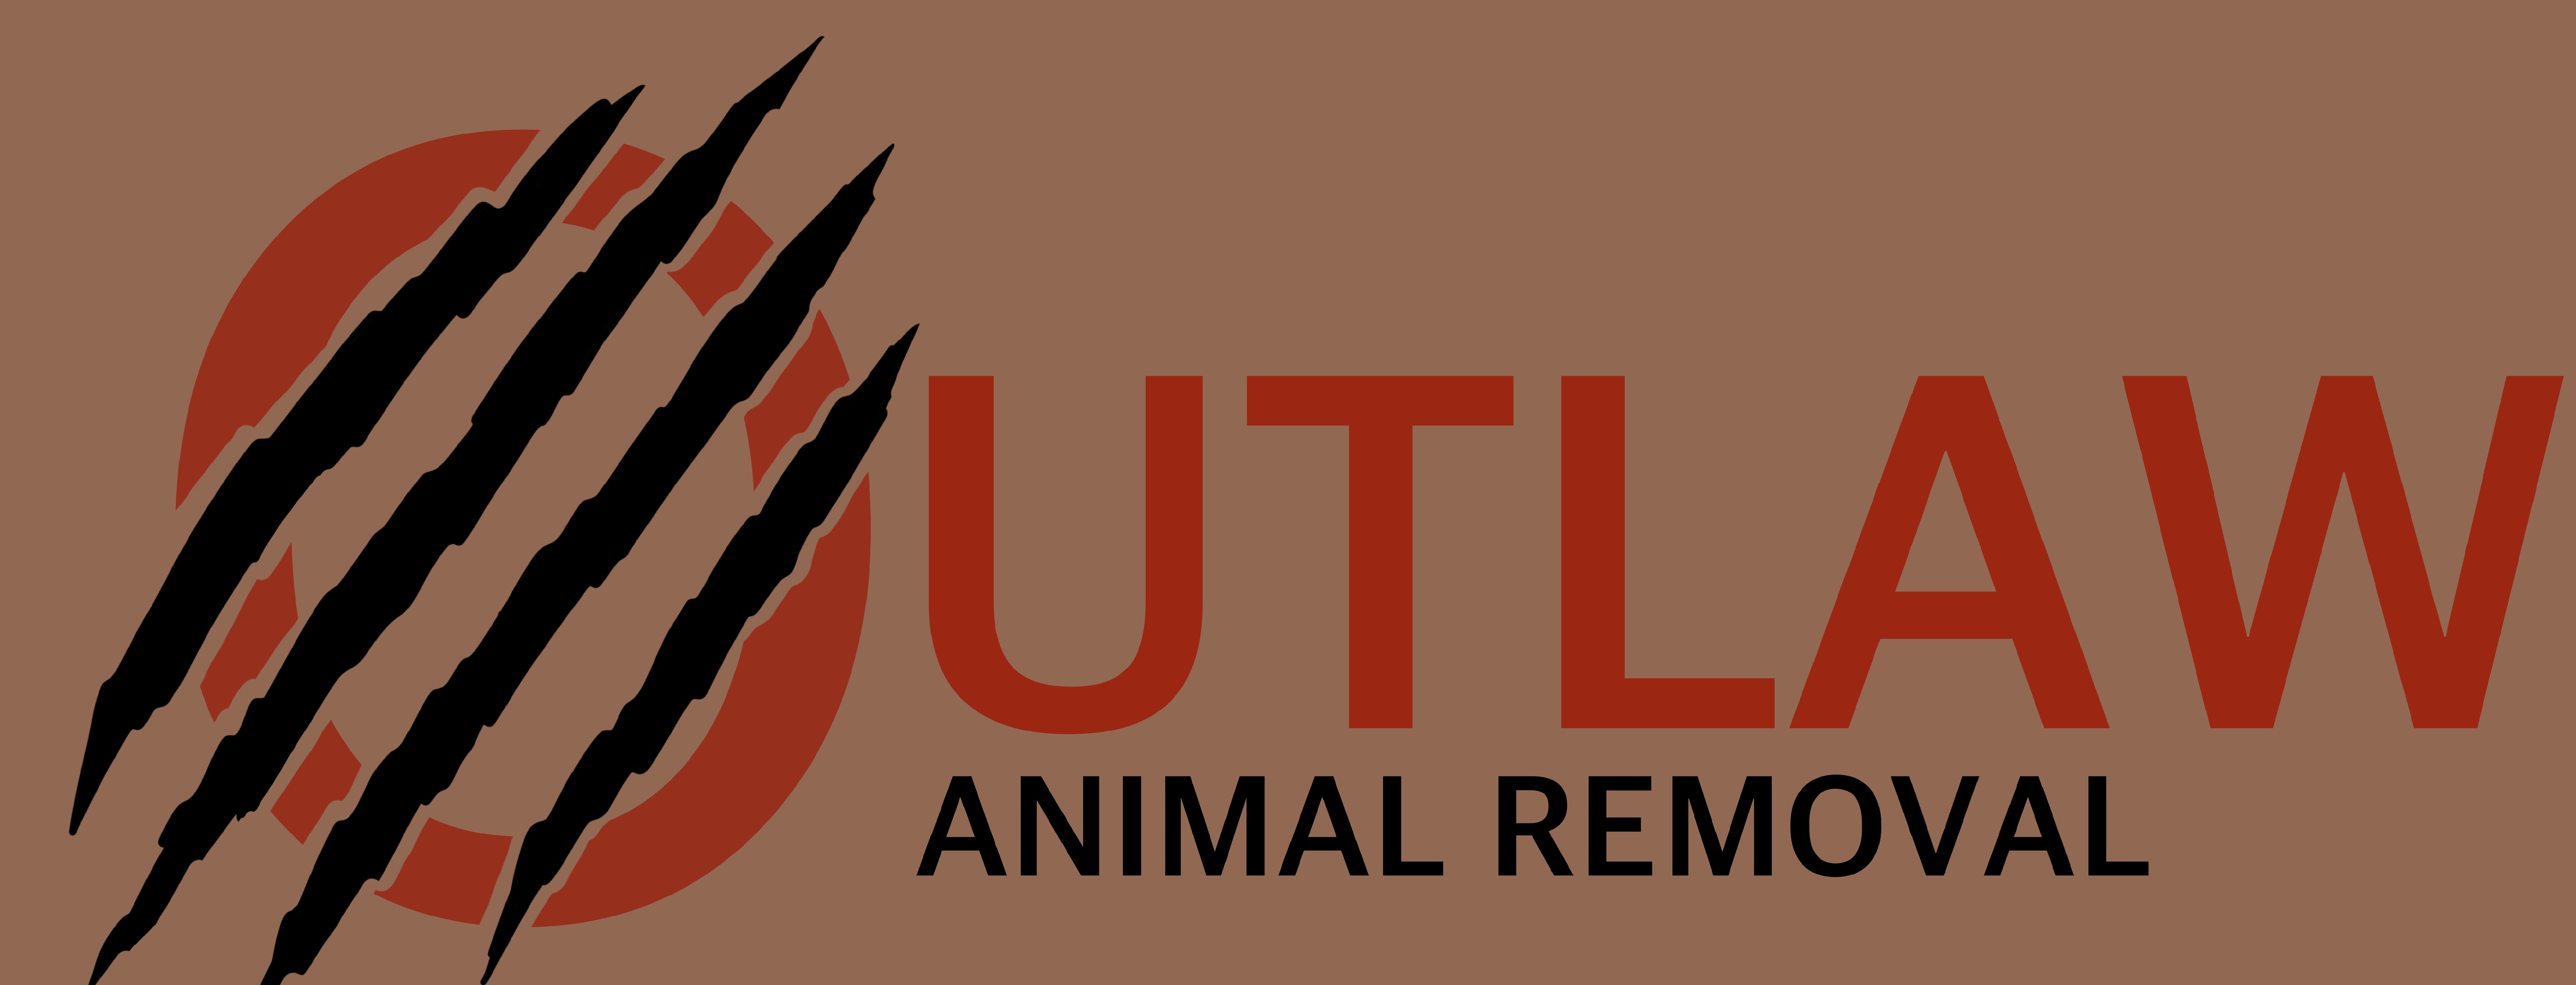 Outlaw Animal Removal Logo